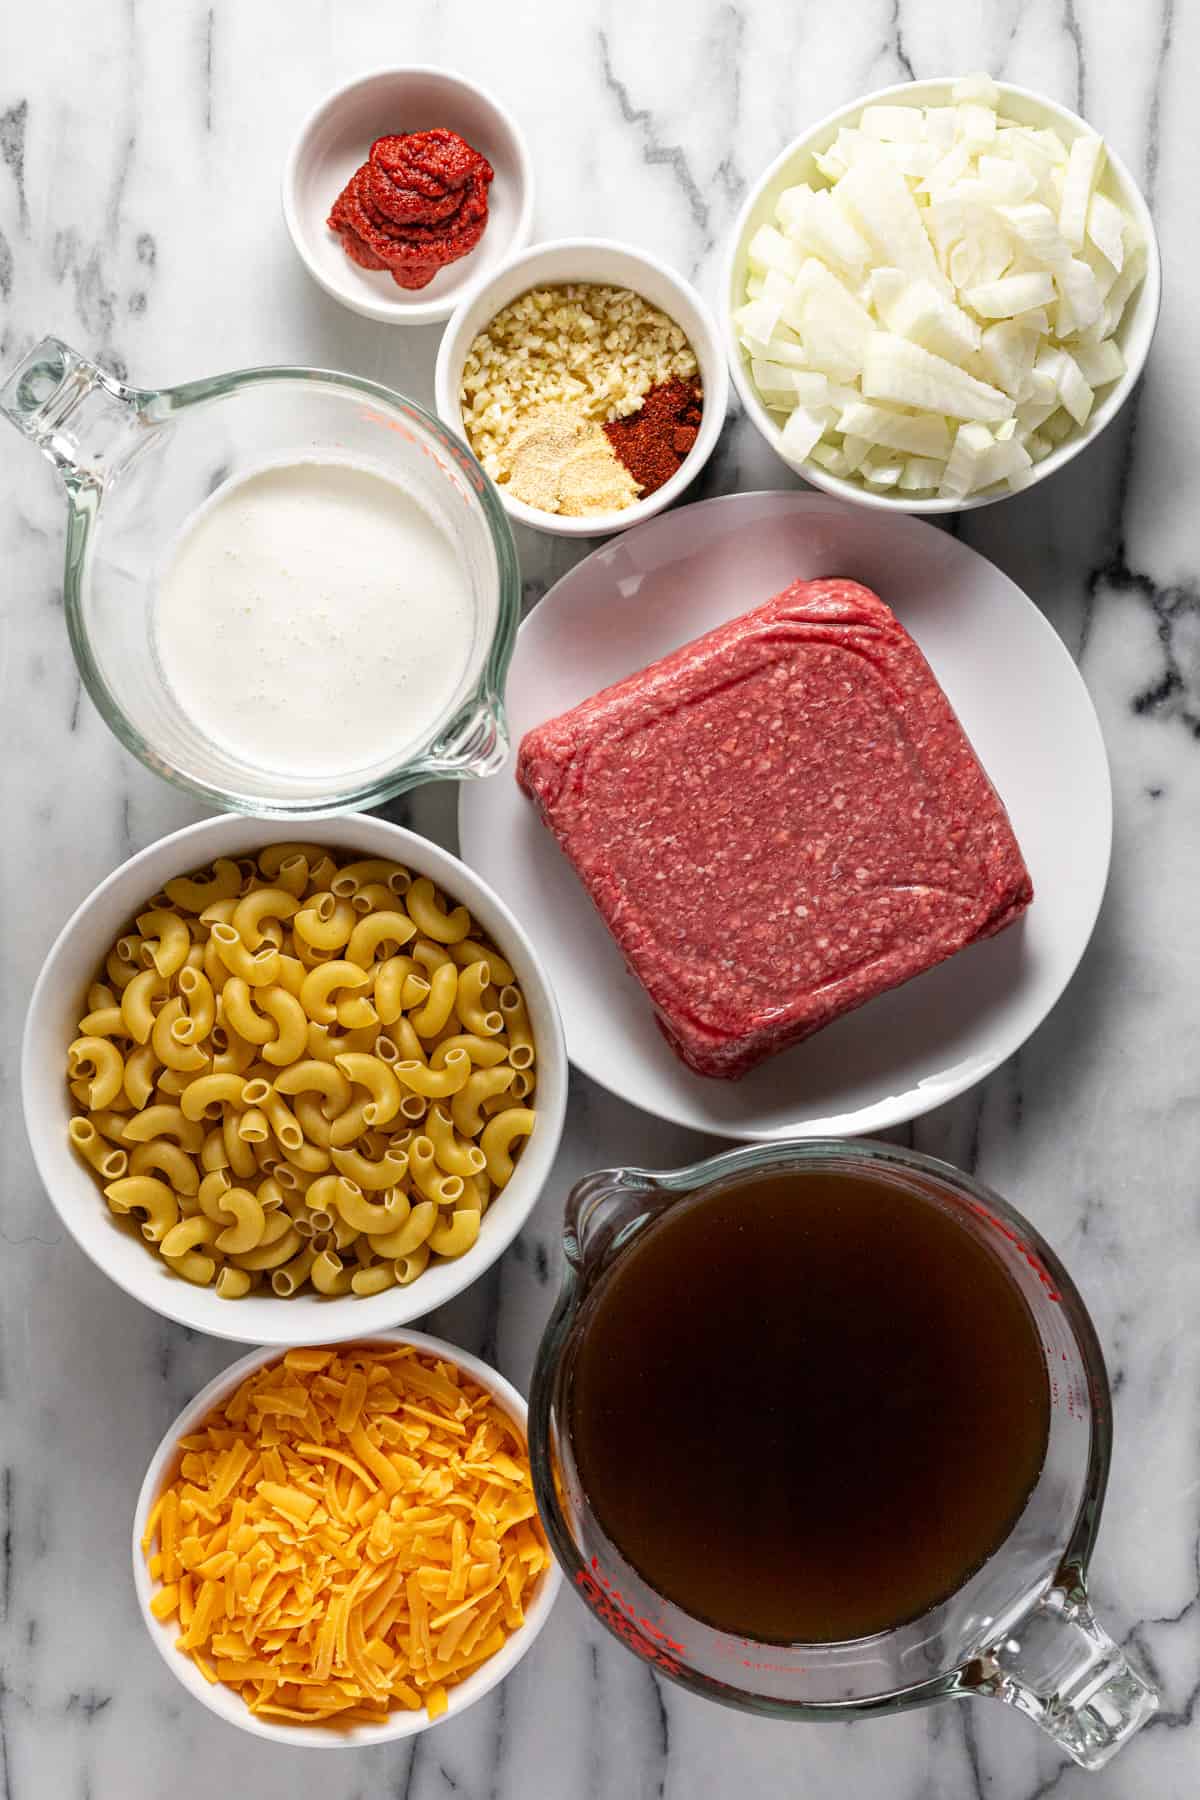 Bowls of ingredients to make hamburger helper at home.